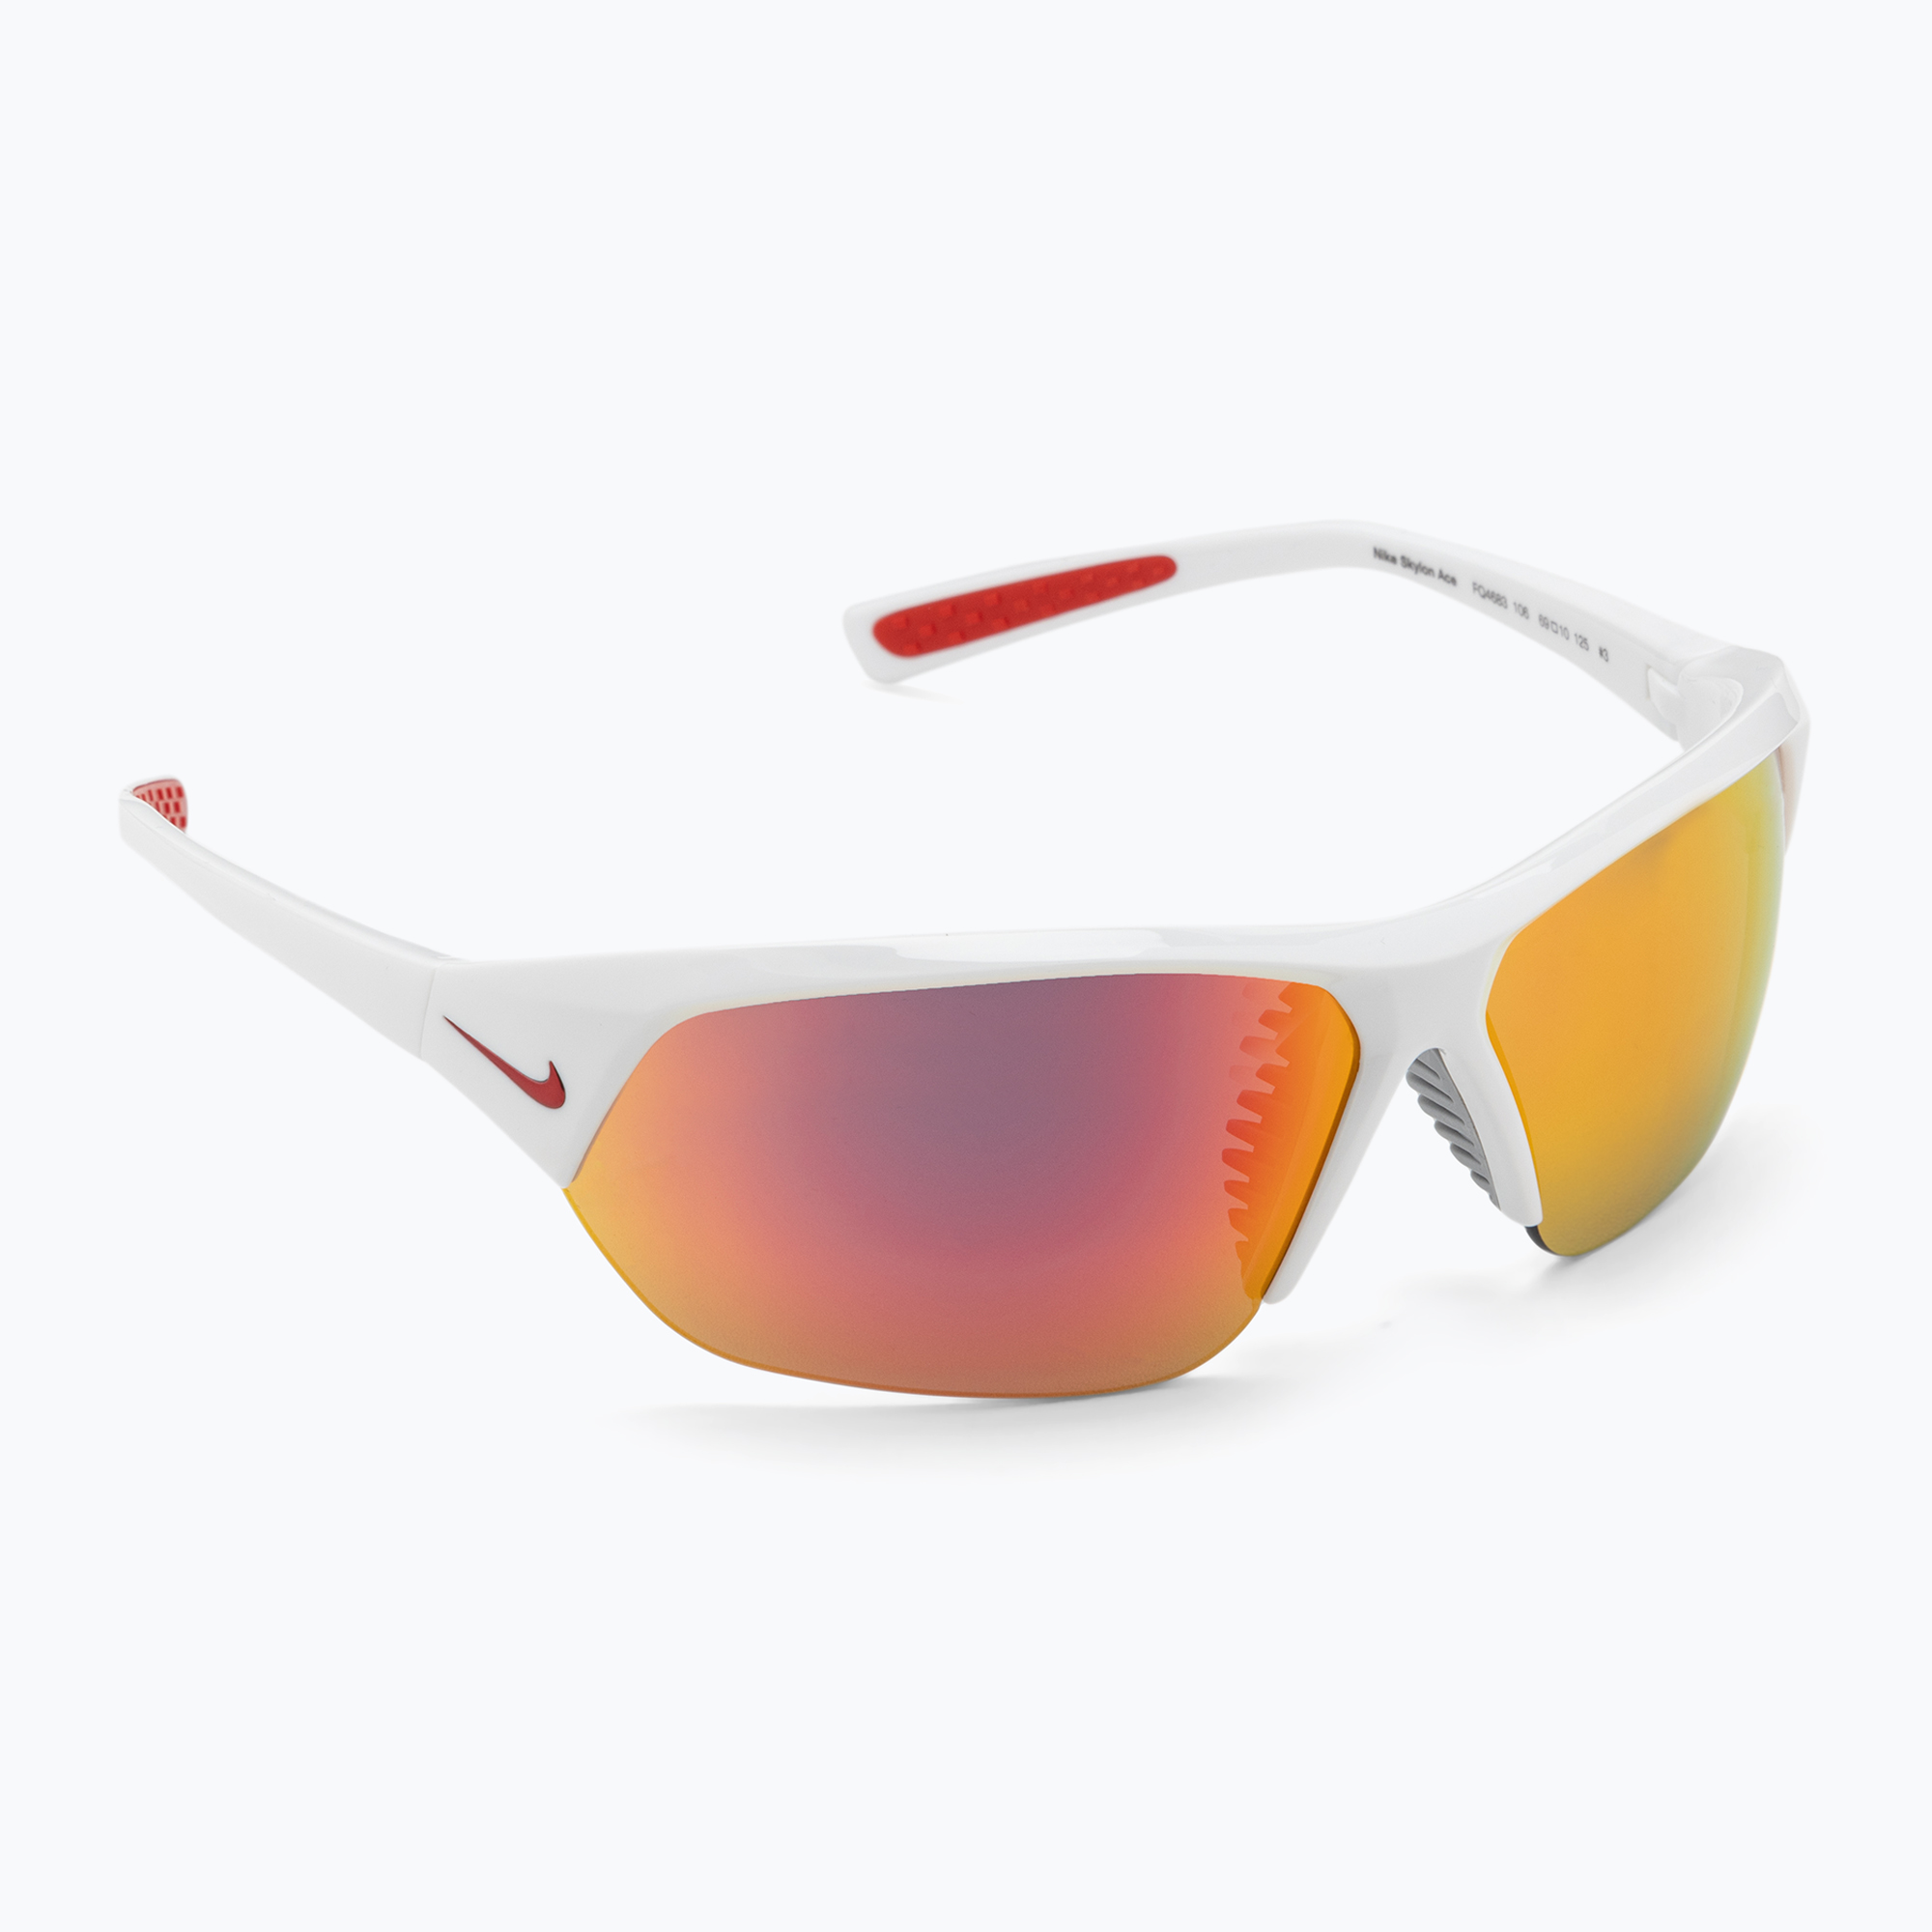 Мъжки слънчеви очила Nike Skylon Ace бяло/сиво с червено огледало